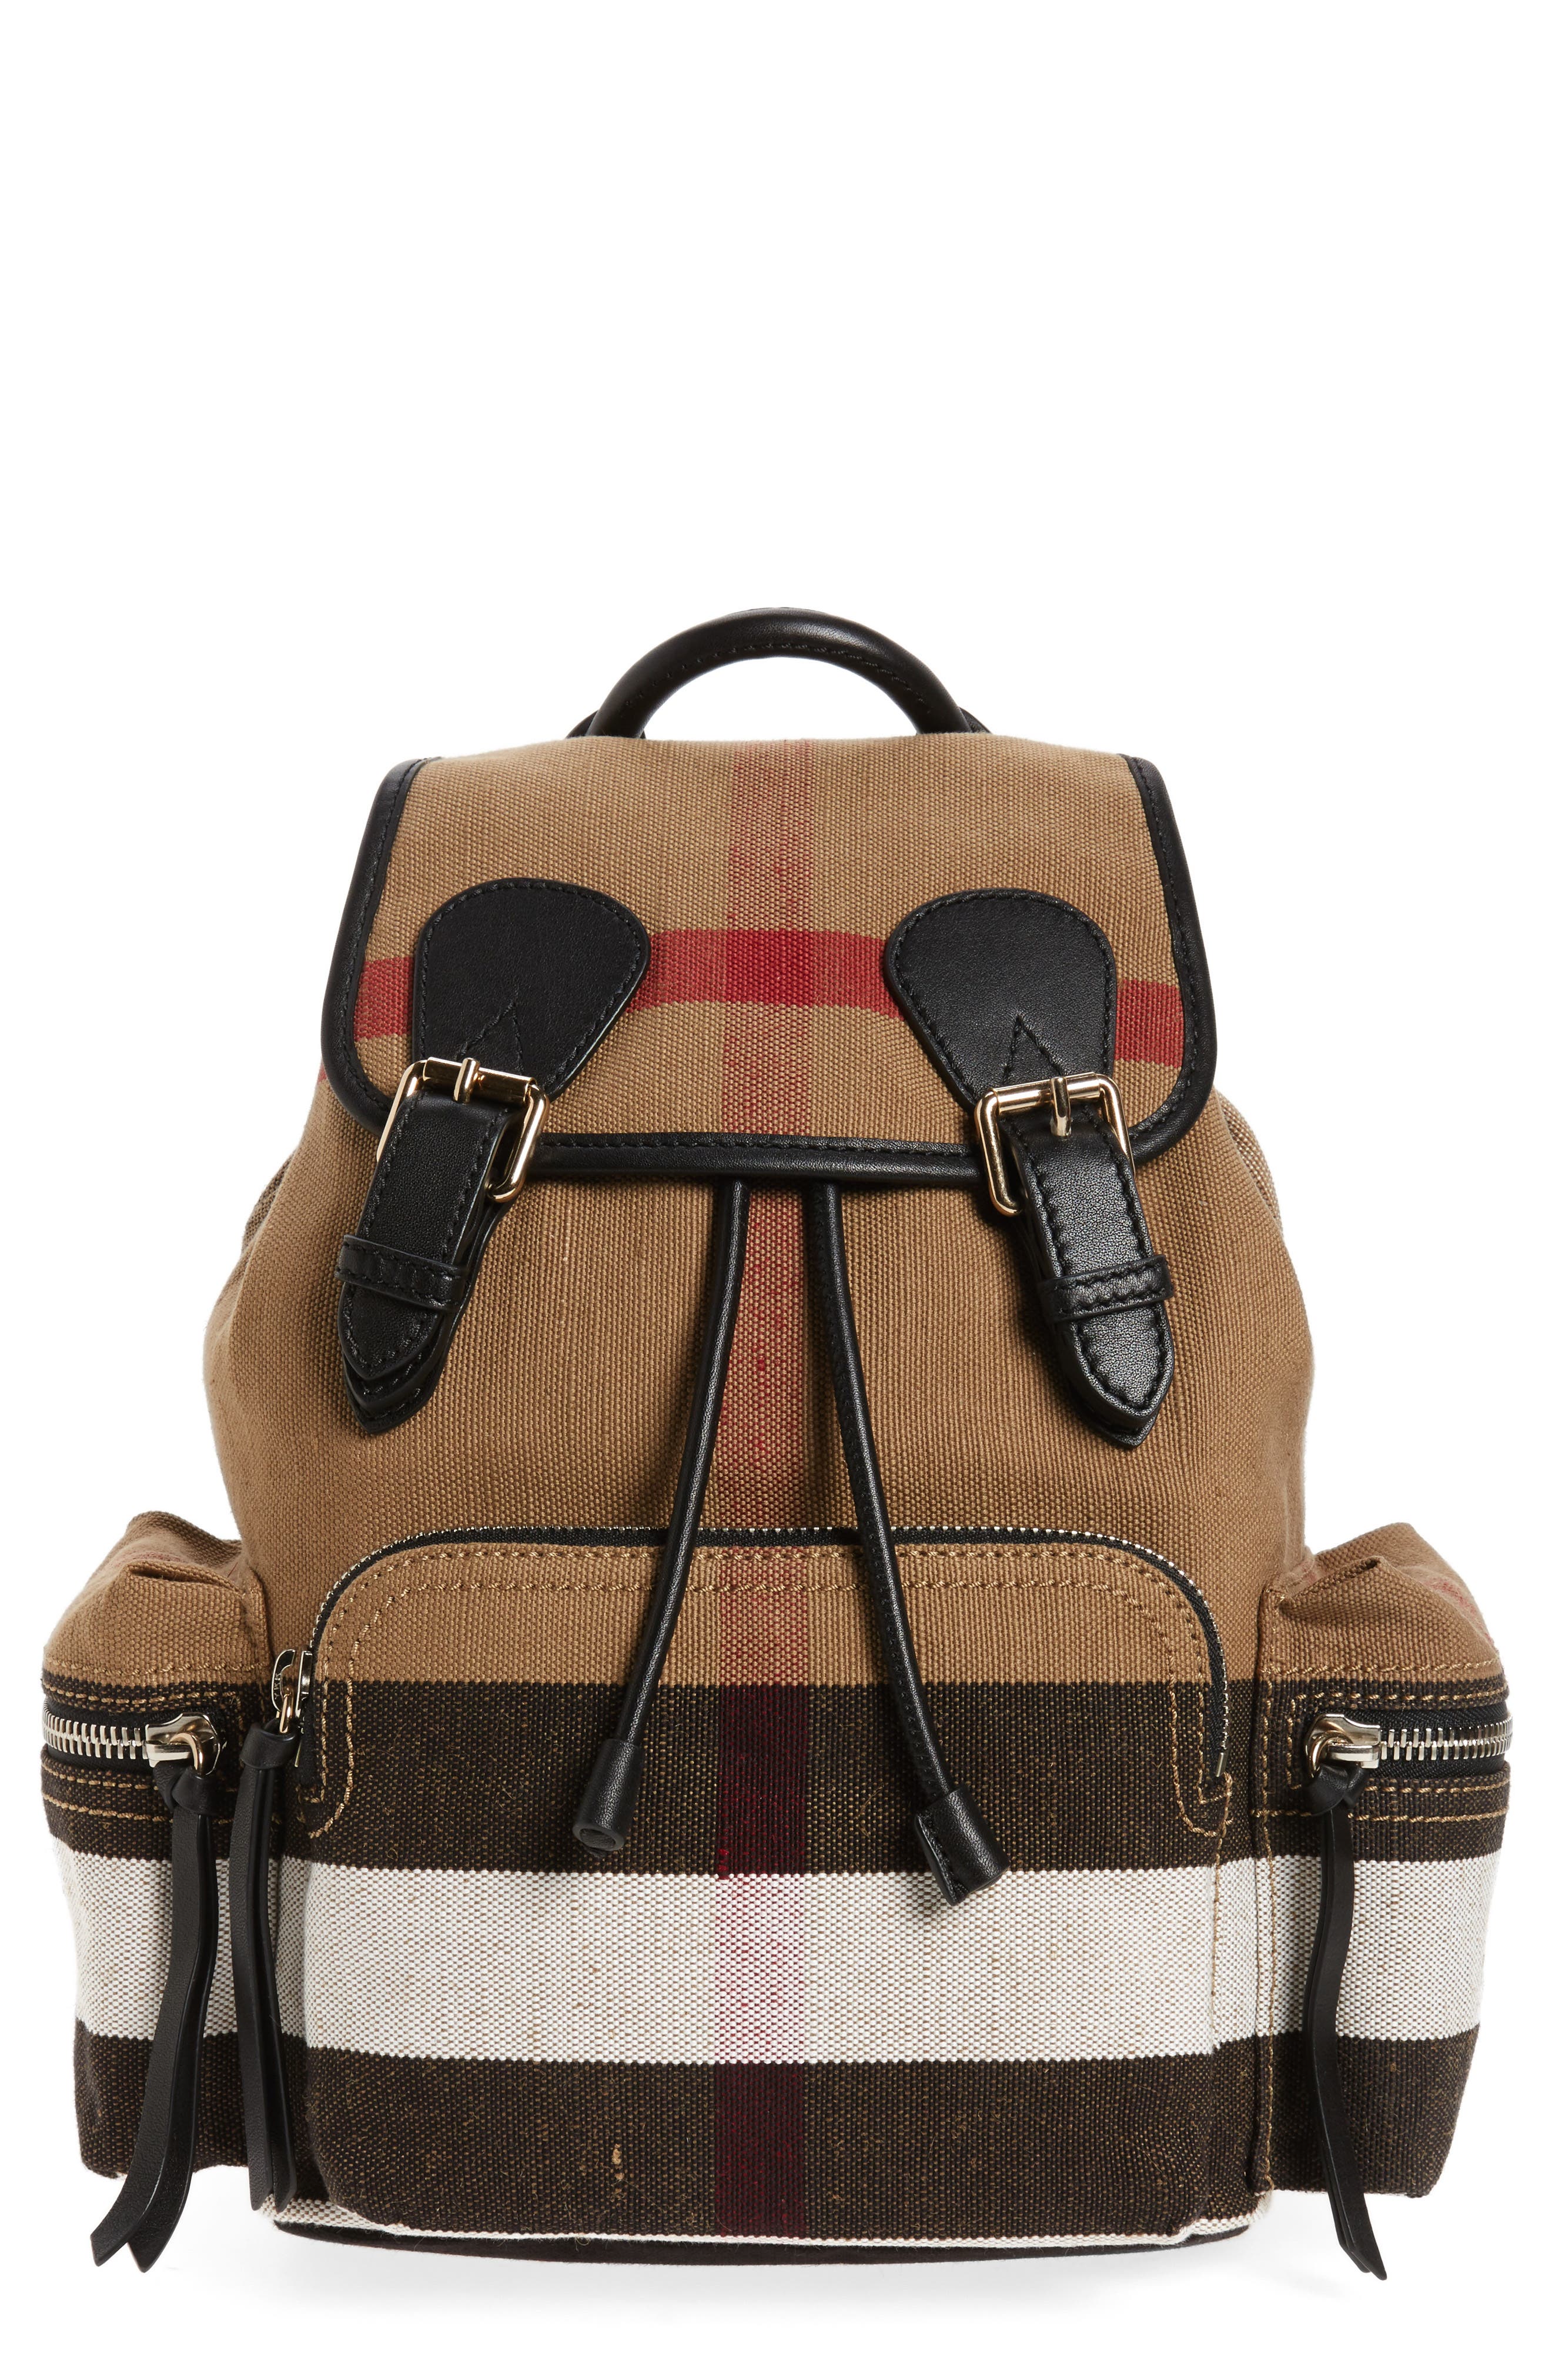 burberry backpack nordstrom